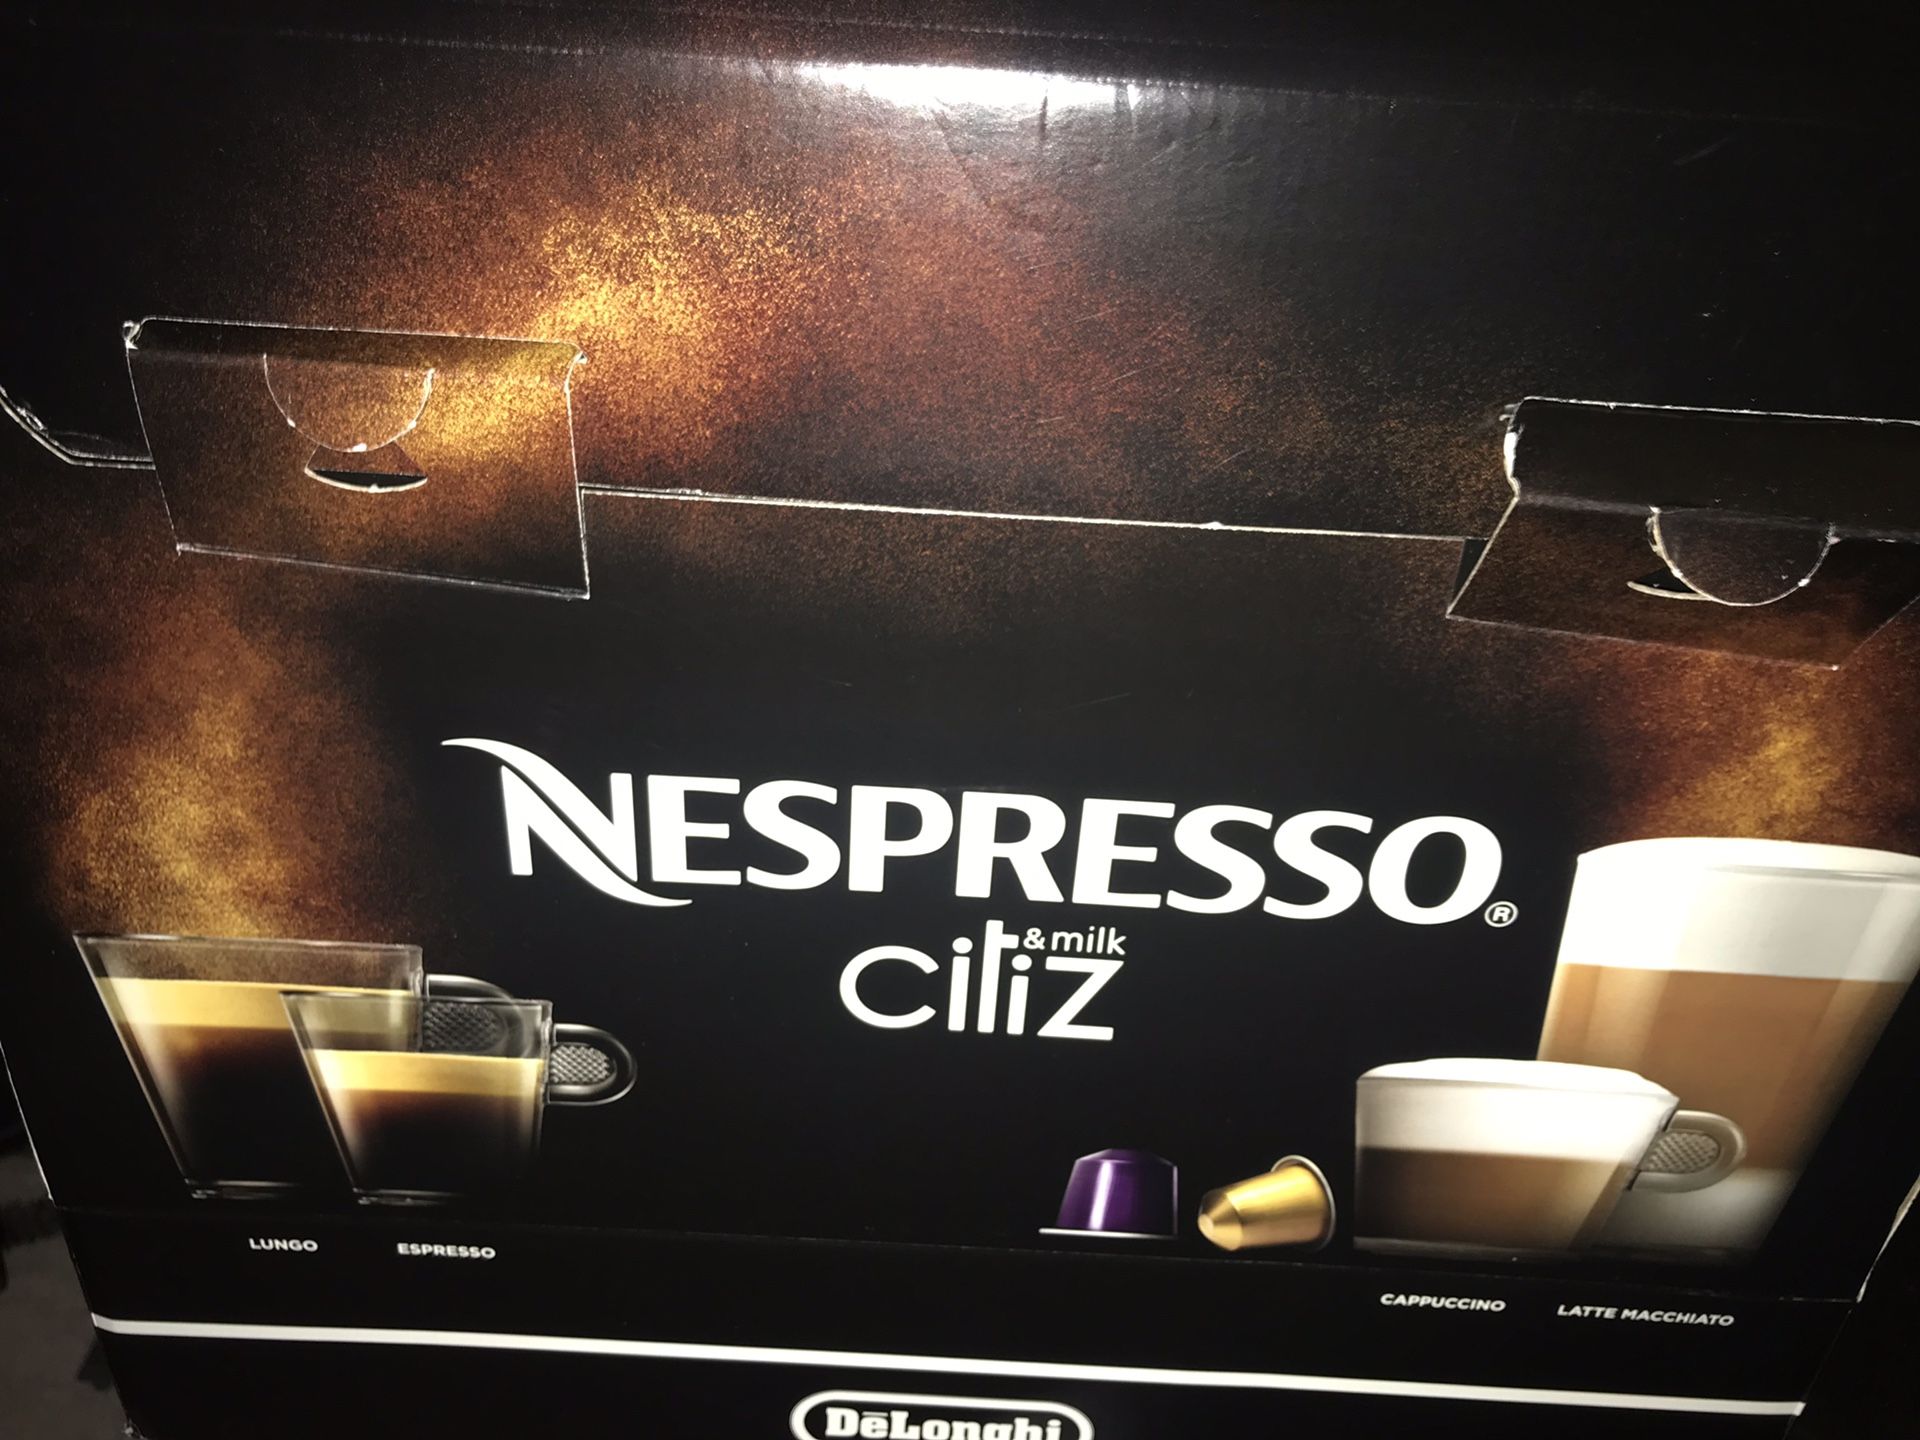 New Nespresso coffee maker (can bid)